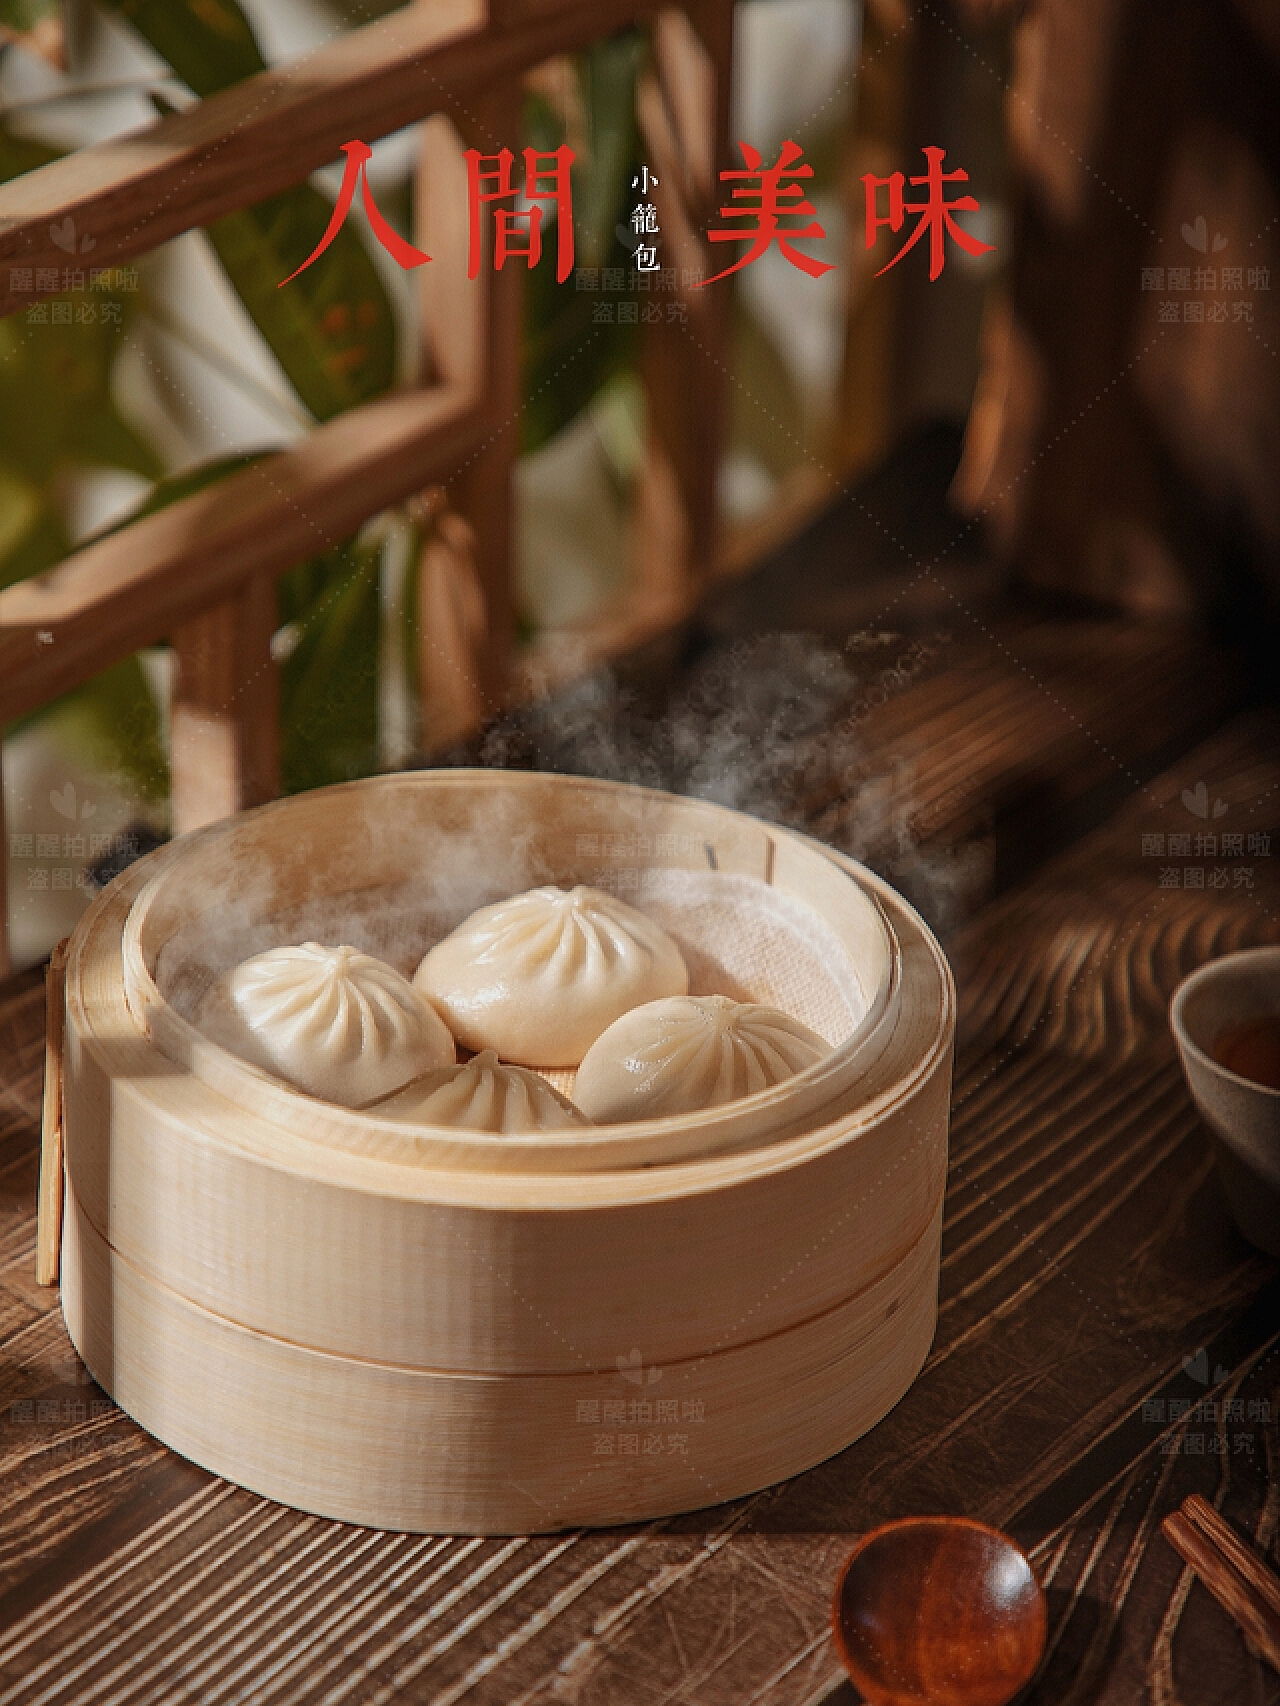 ziyantang: 上海美食-小吃篇 最道地的上海美食